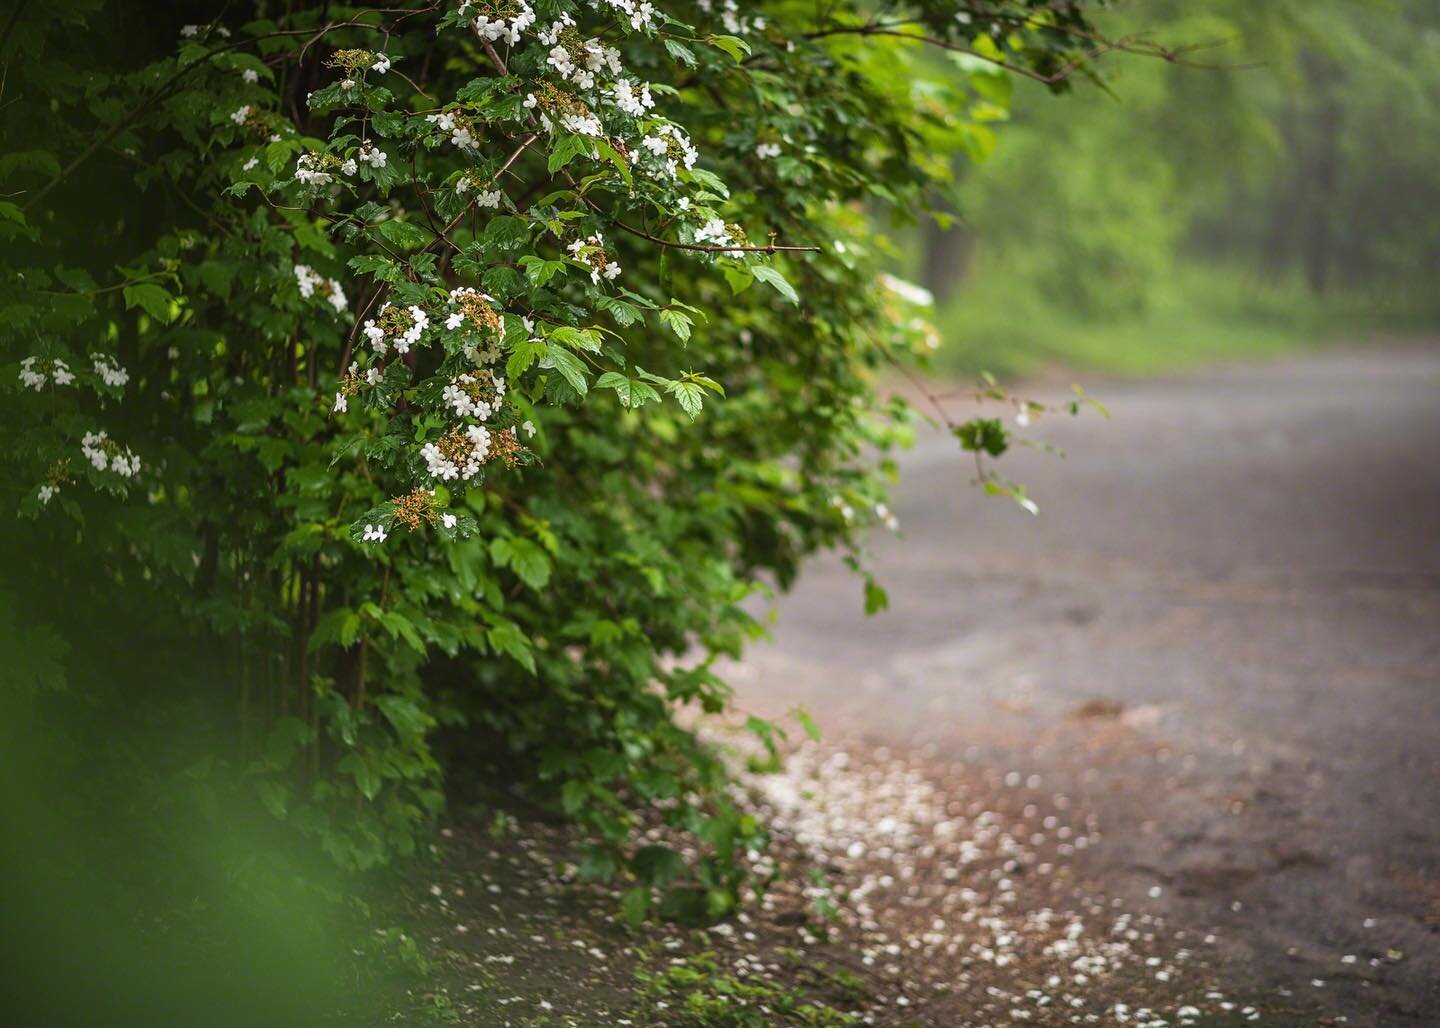 ．
Poetry of fallen petals.
．
European cranberry bush / guelder rose / viburnum opulus

Central Park, NYC
&copy;Kristina Clark, 2022

#mycentralpark 
#cranberrybush 
#guelderrose 
#viburnumopulus 
#crampbark 
#moodygrams 
#rainyday 
#fallenflowers 
#k